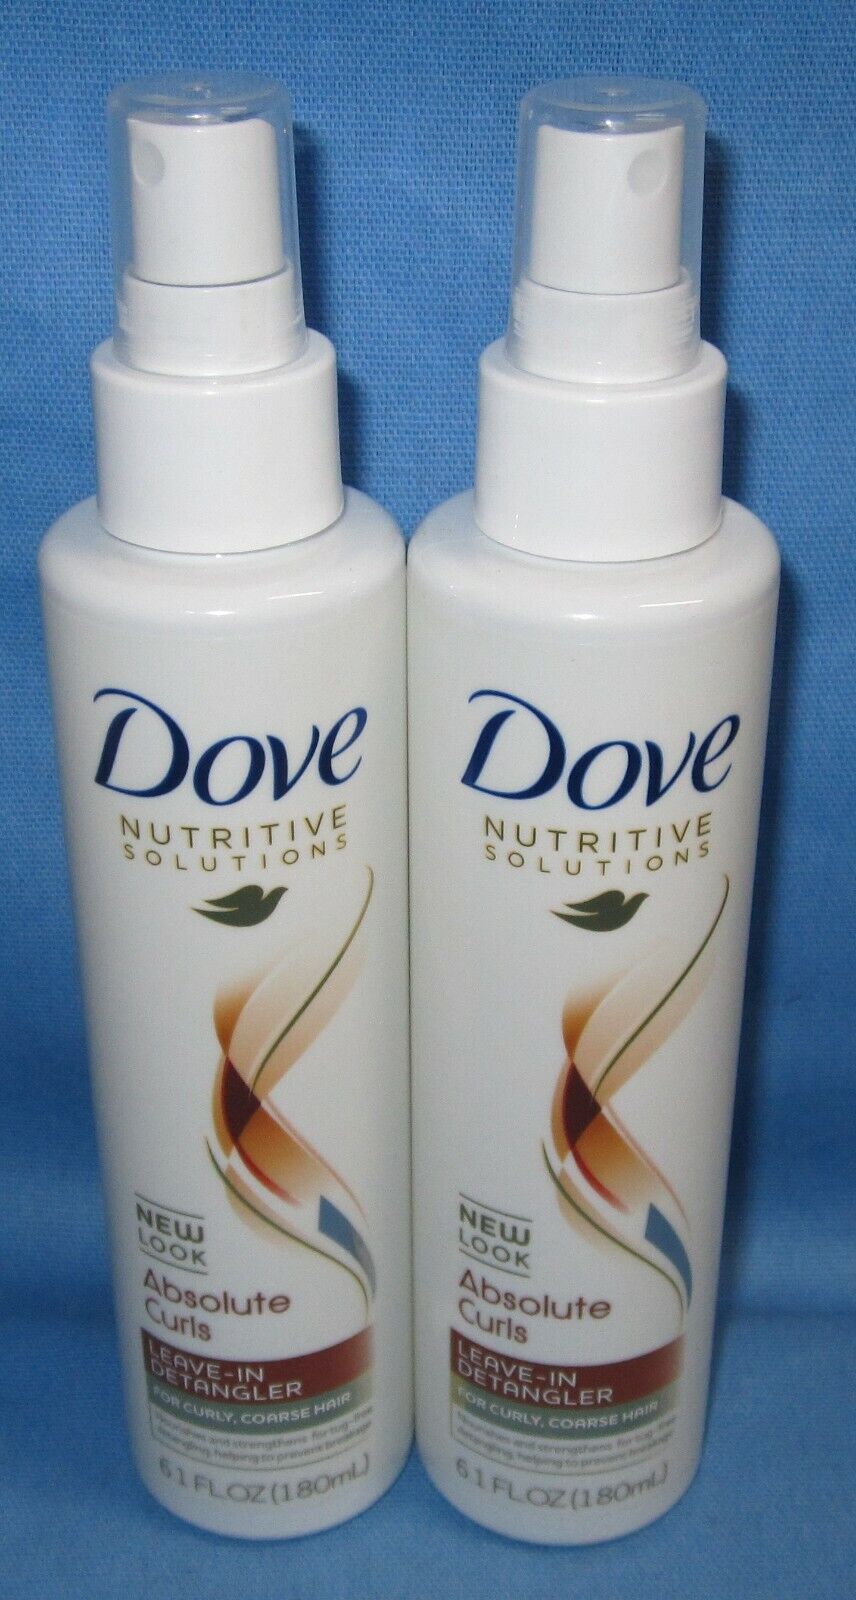 2 Bottles of Dove Nutritive Solutions Absolute Curls Leave-in Detangler